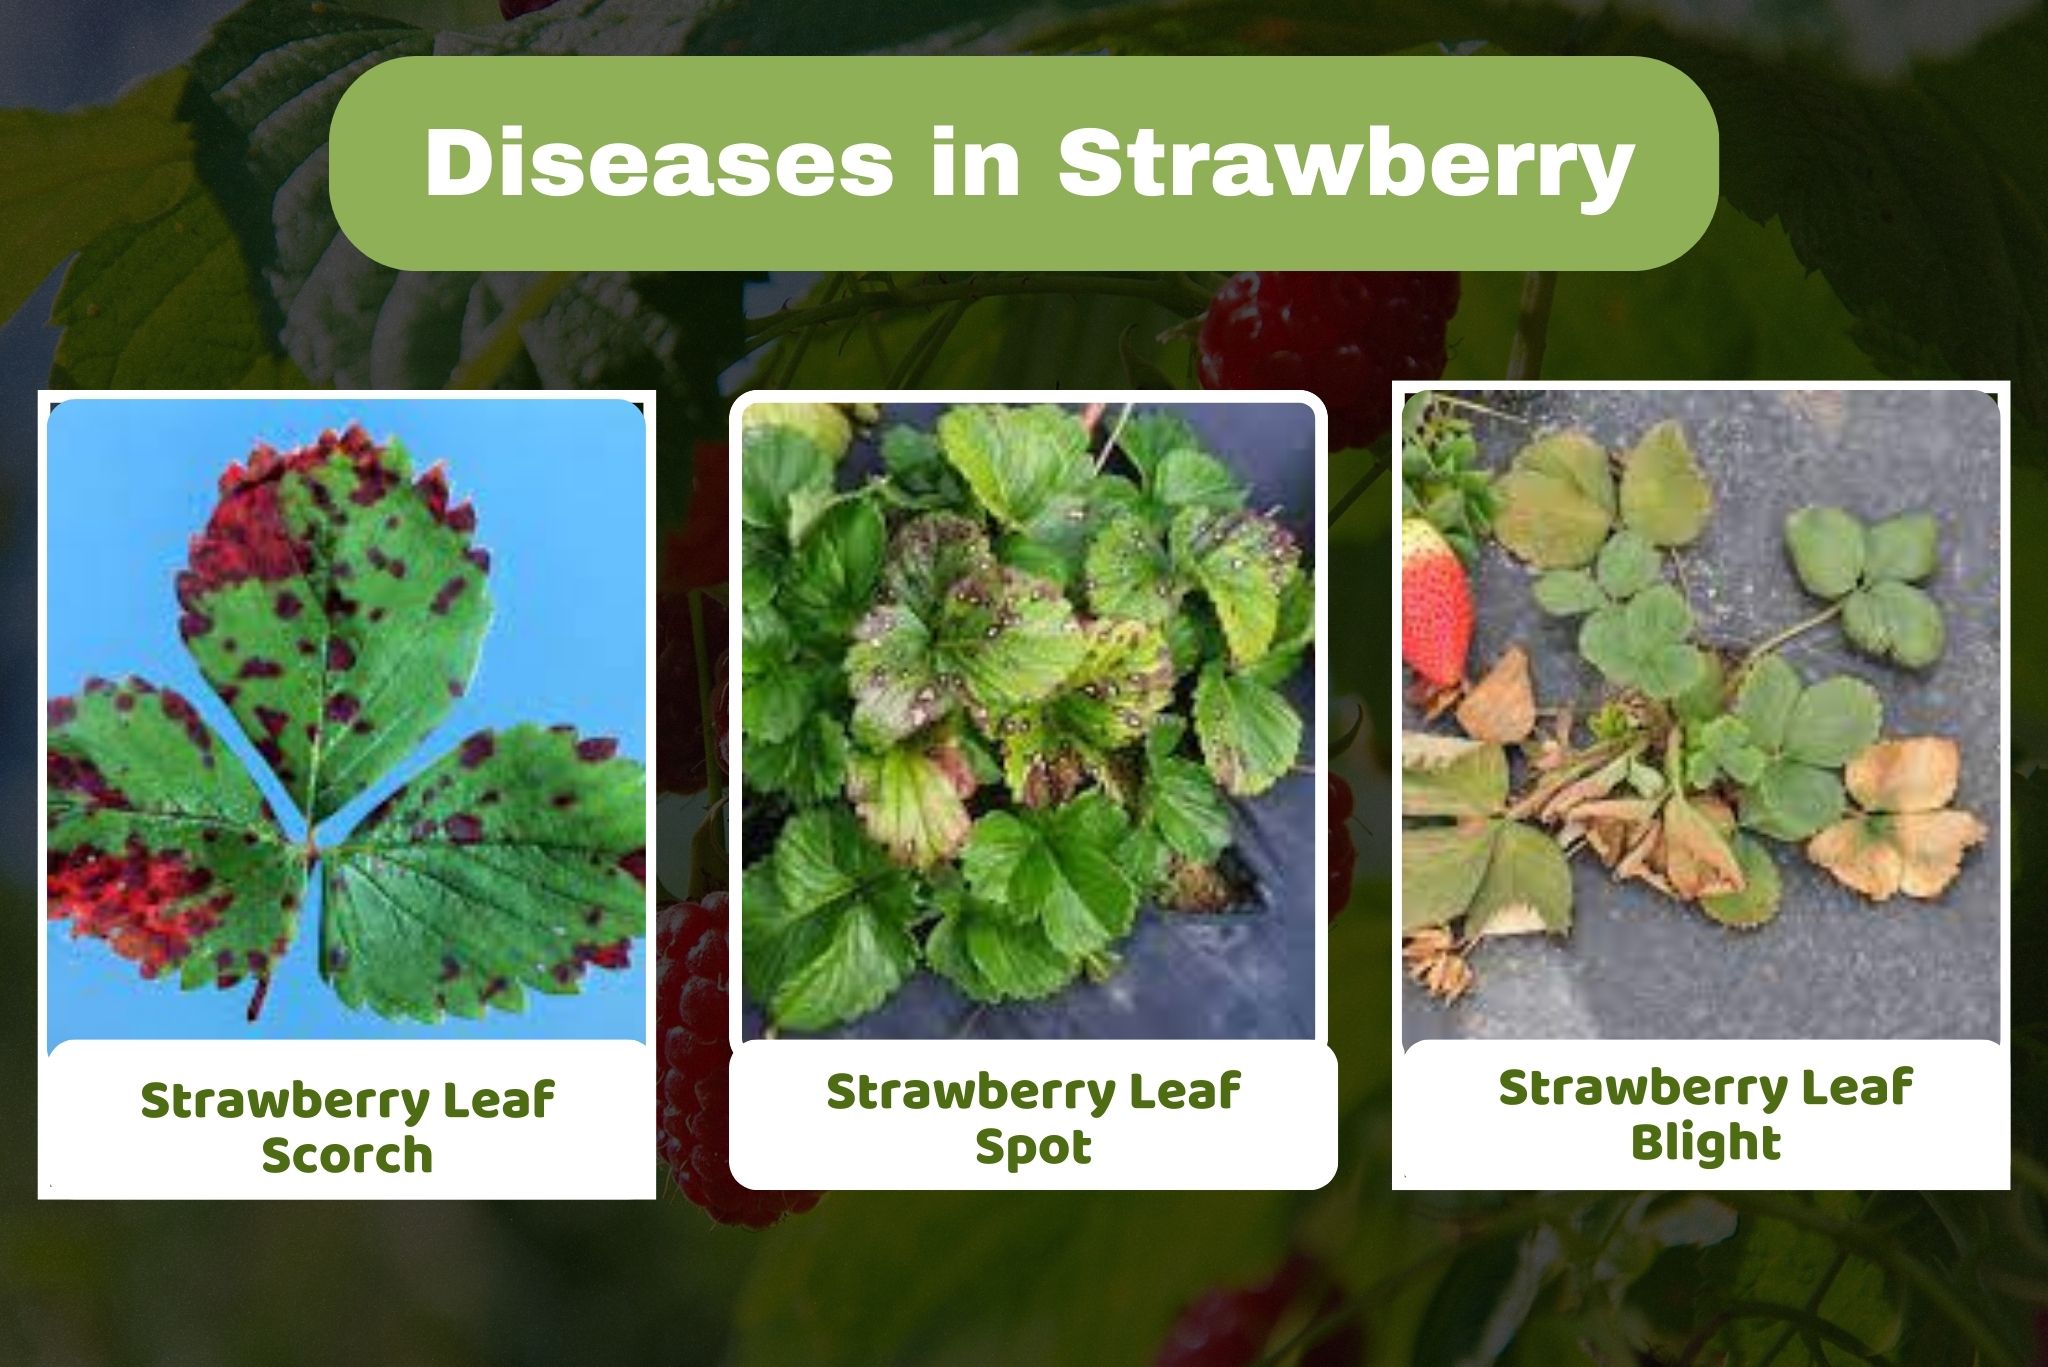 Diseases affecting strawberries